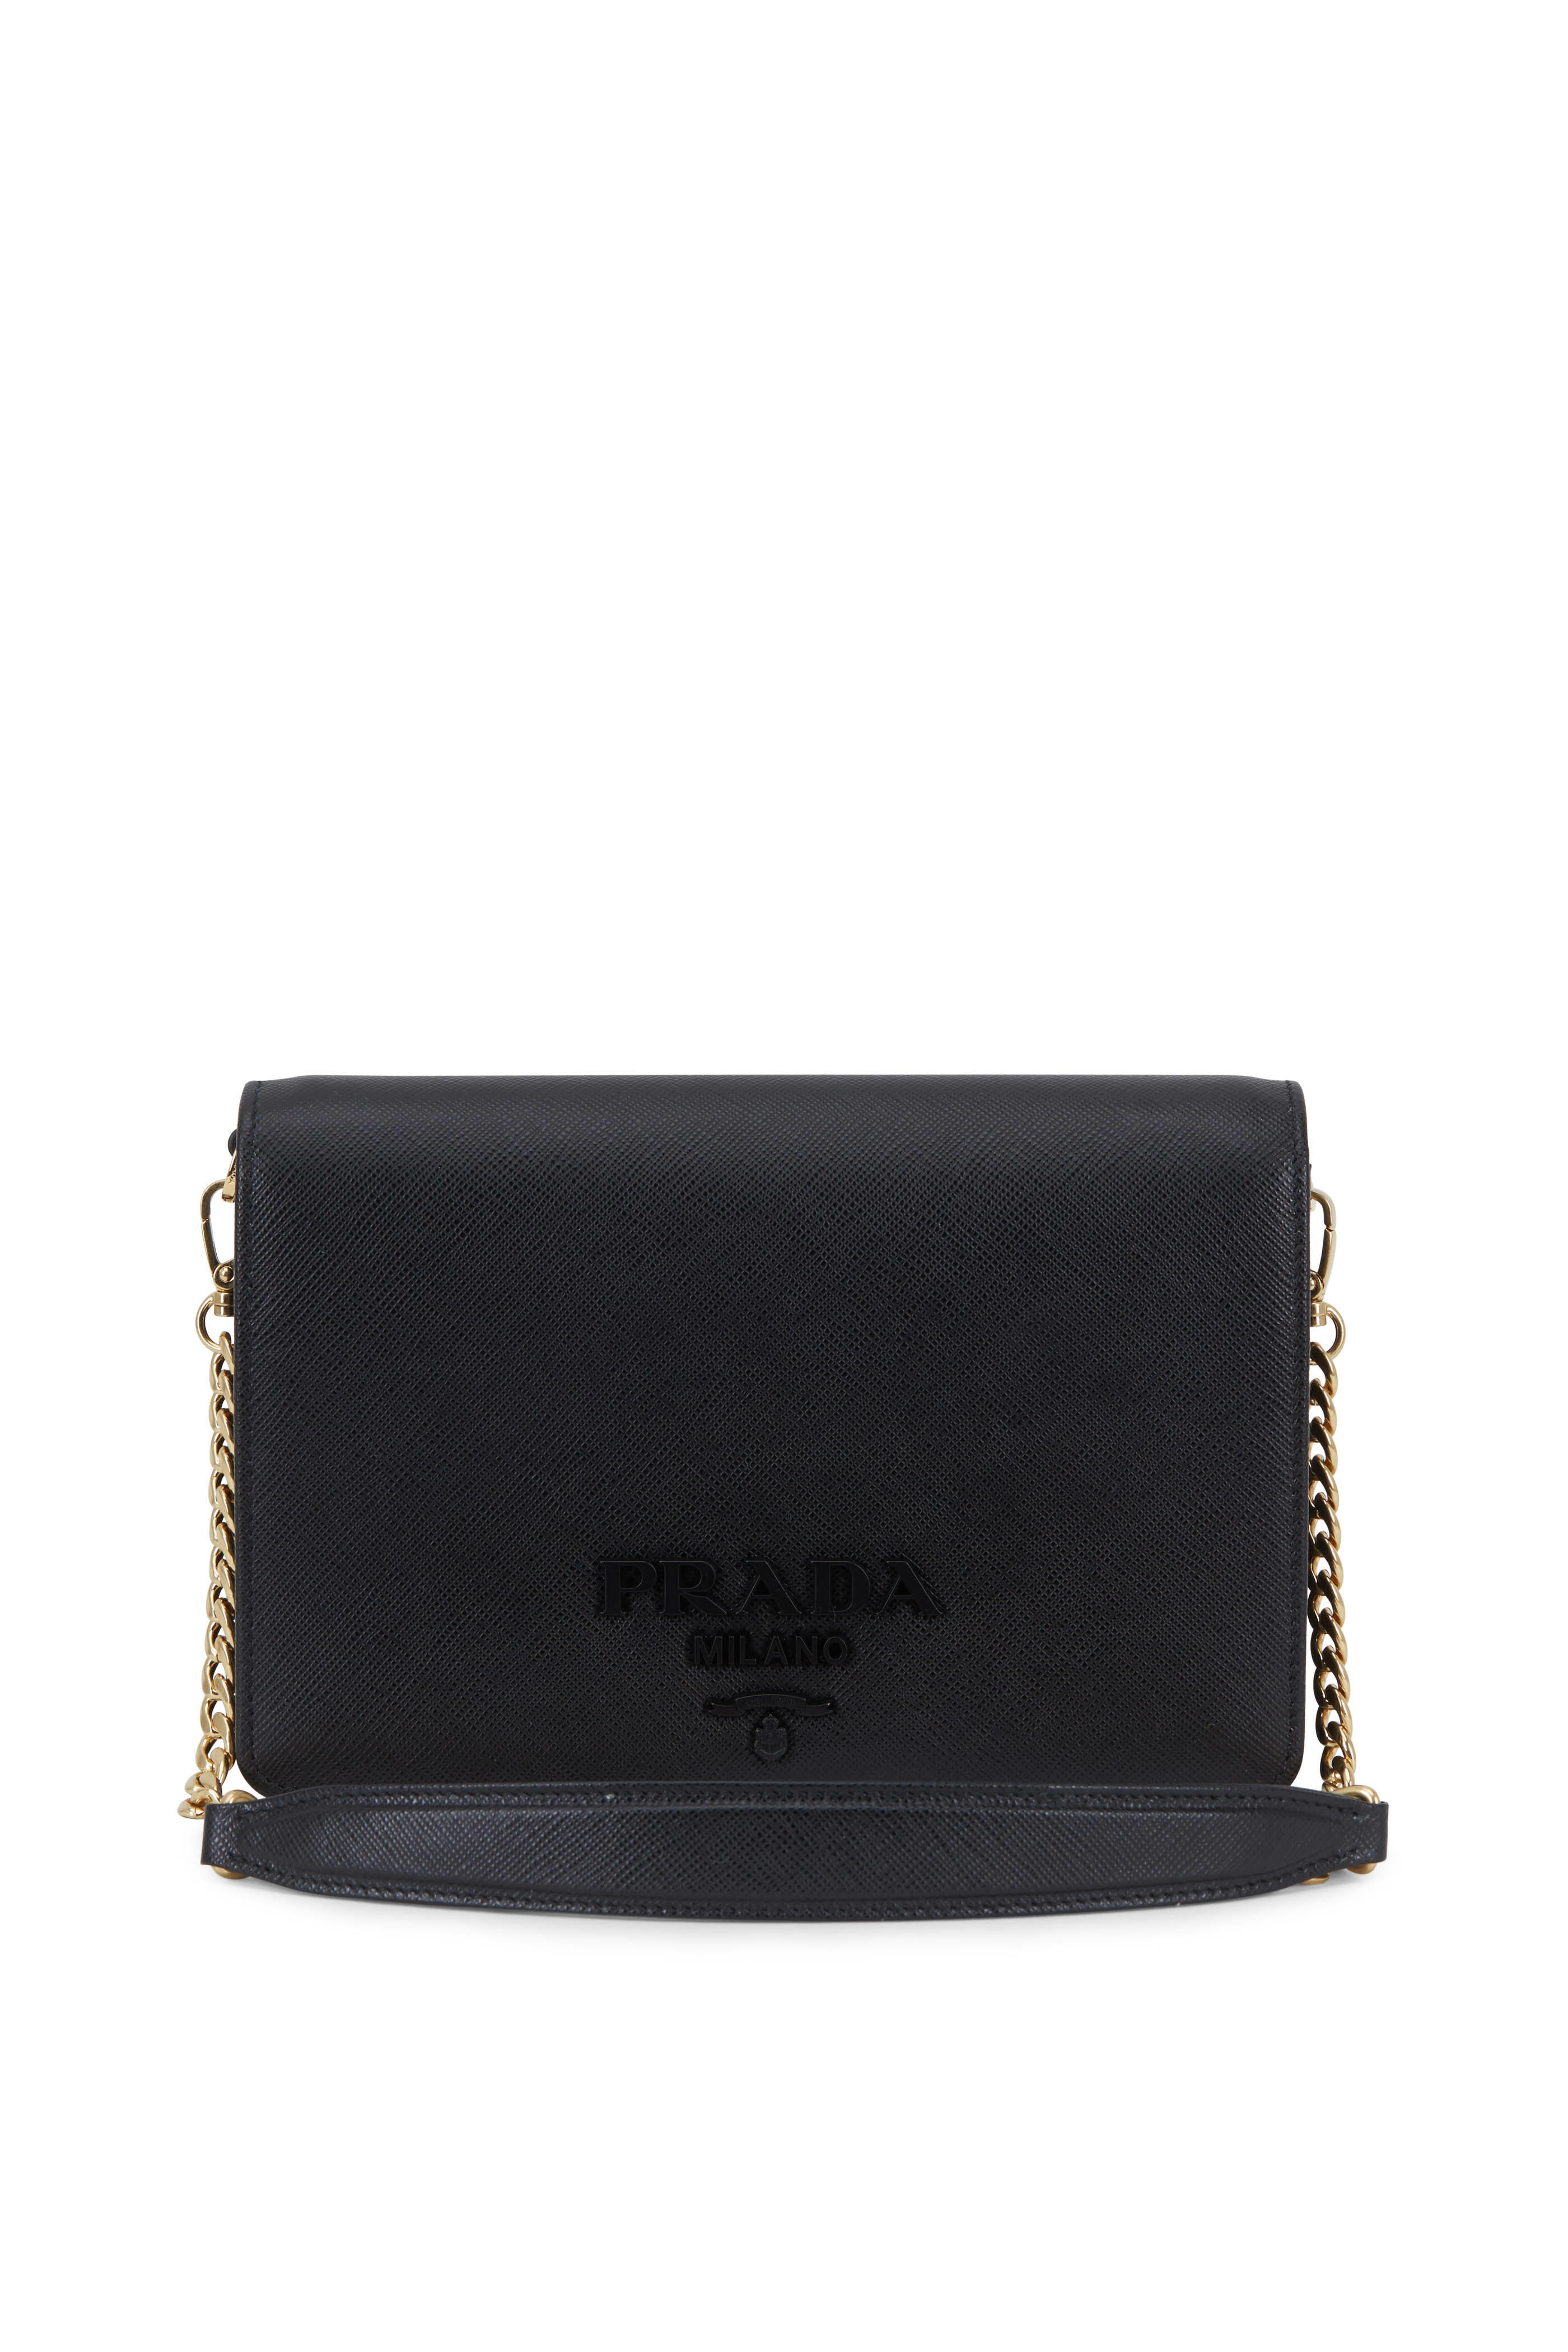 Prada Black Saffiano Leather Wallet on Chain Bag